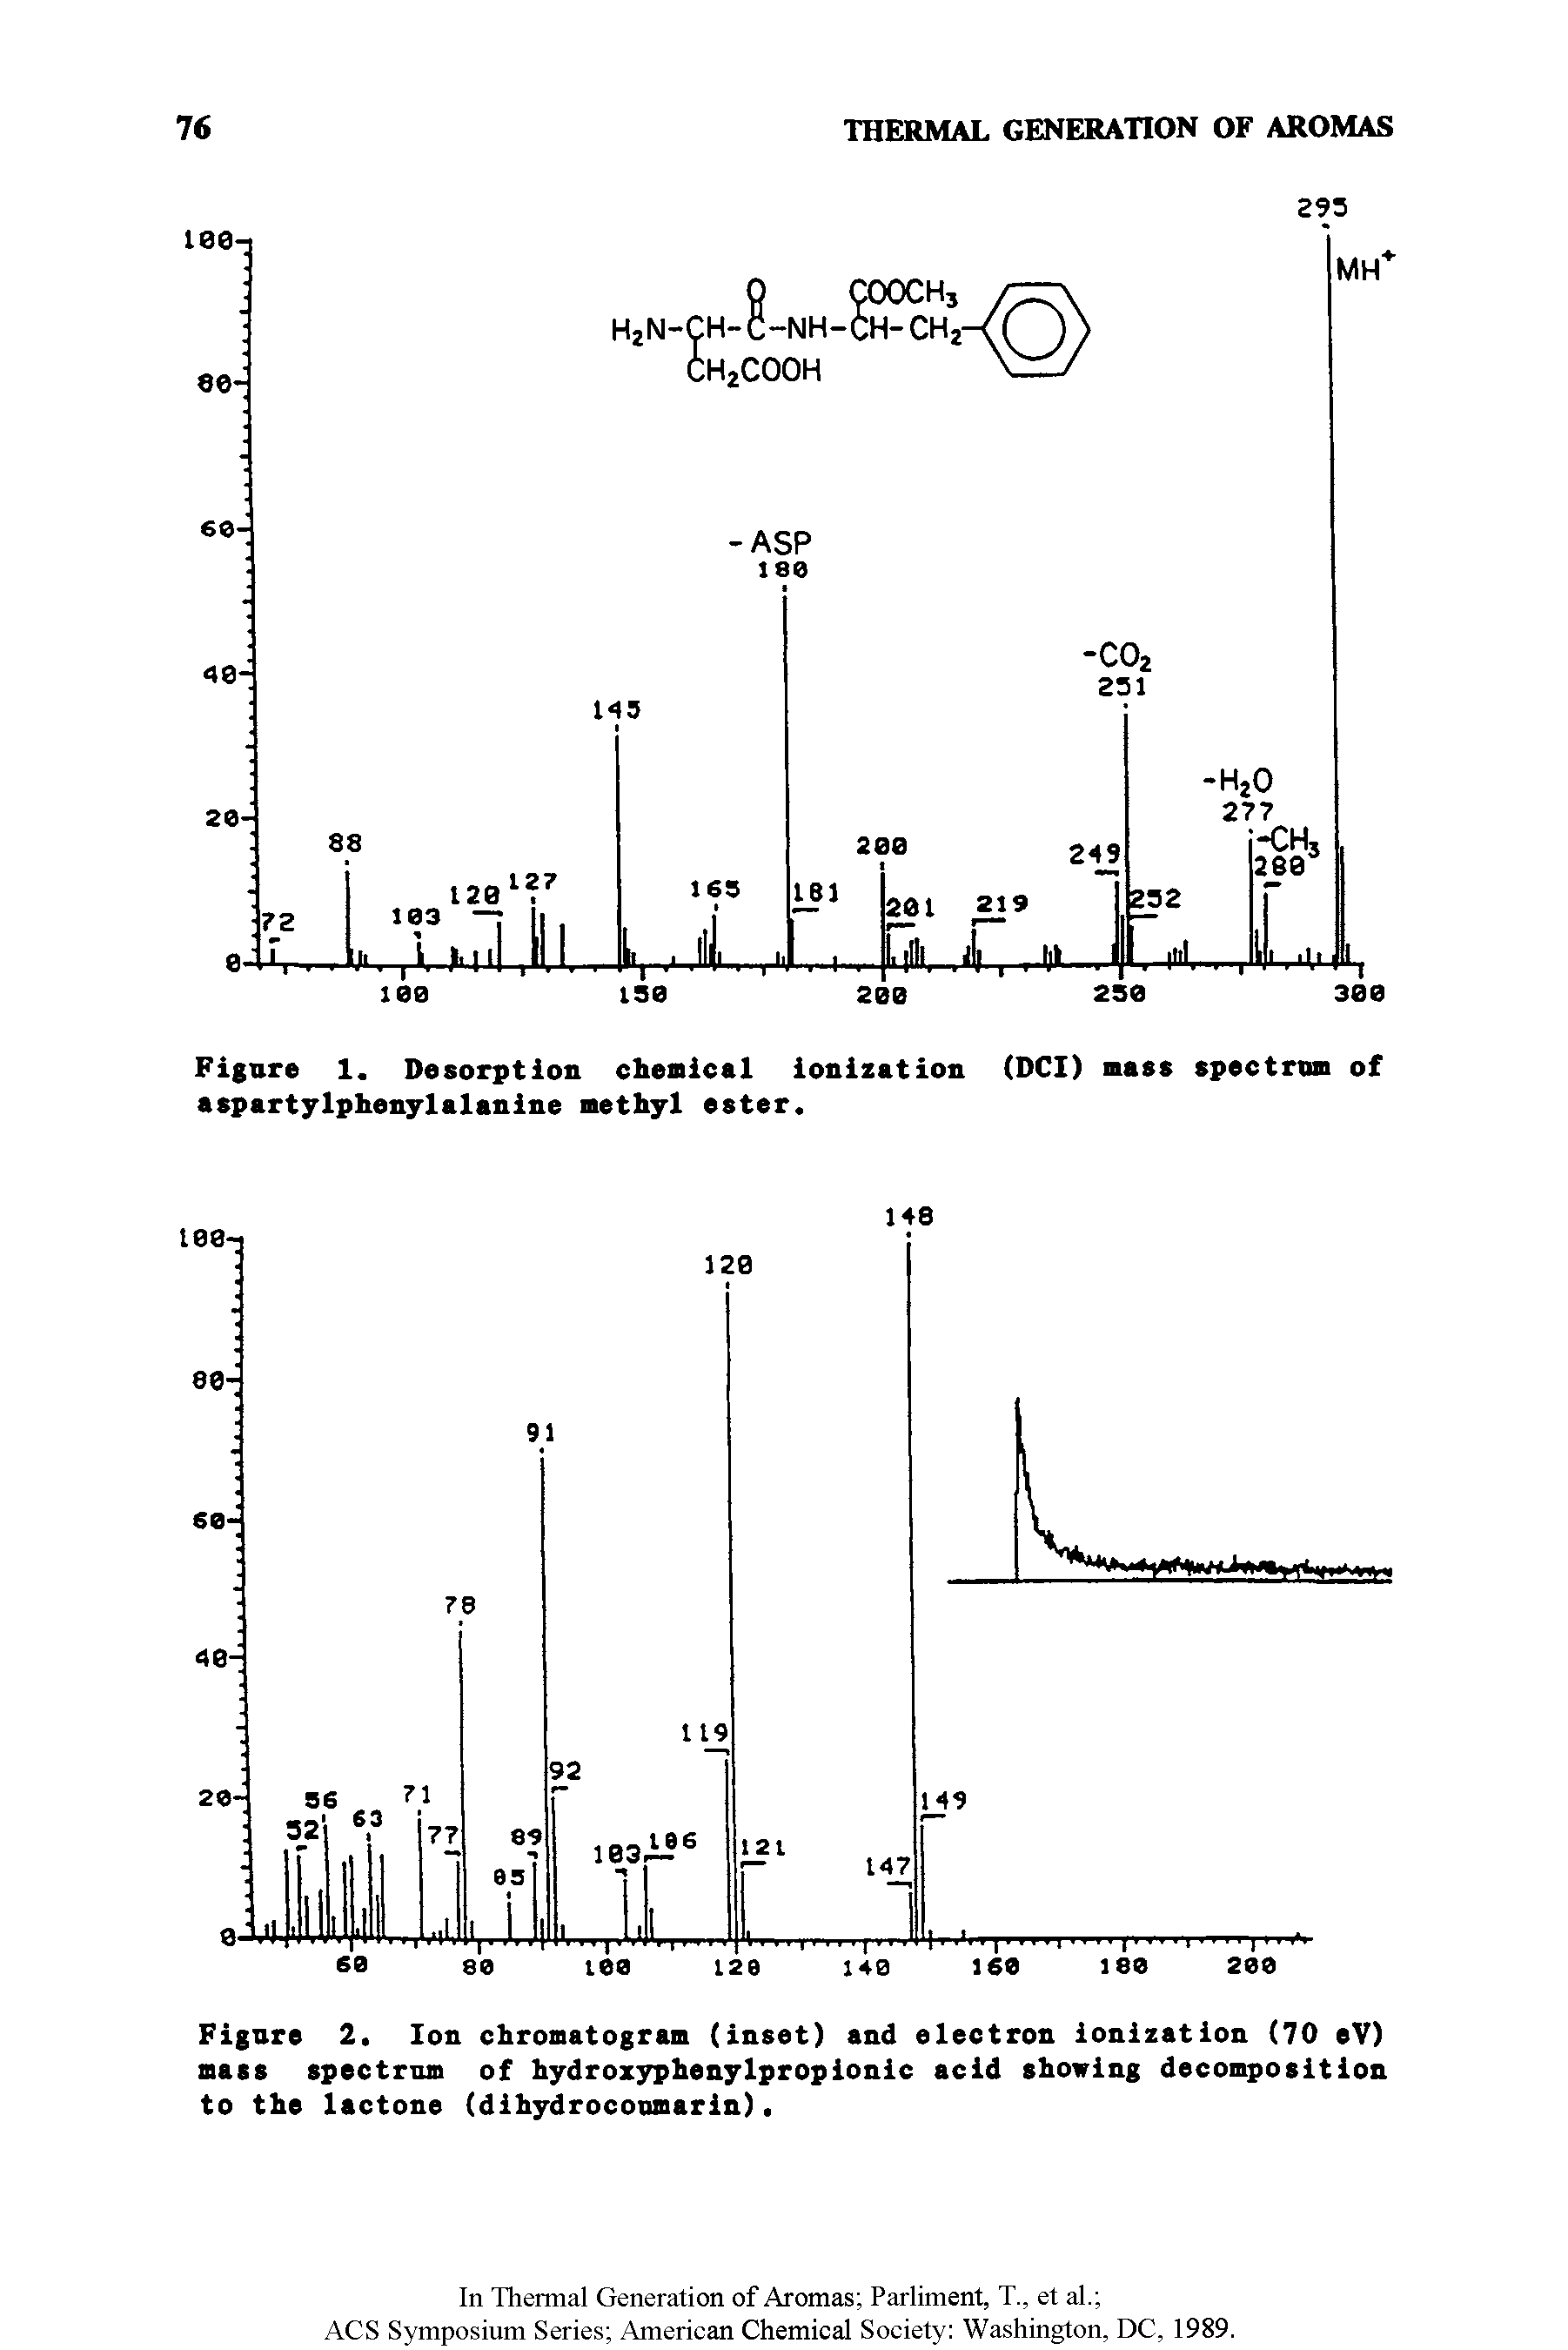 Figure 1. Desorption chemical ionization (DCI) mass spectrum of aspartylphenylalanine methyl ester.